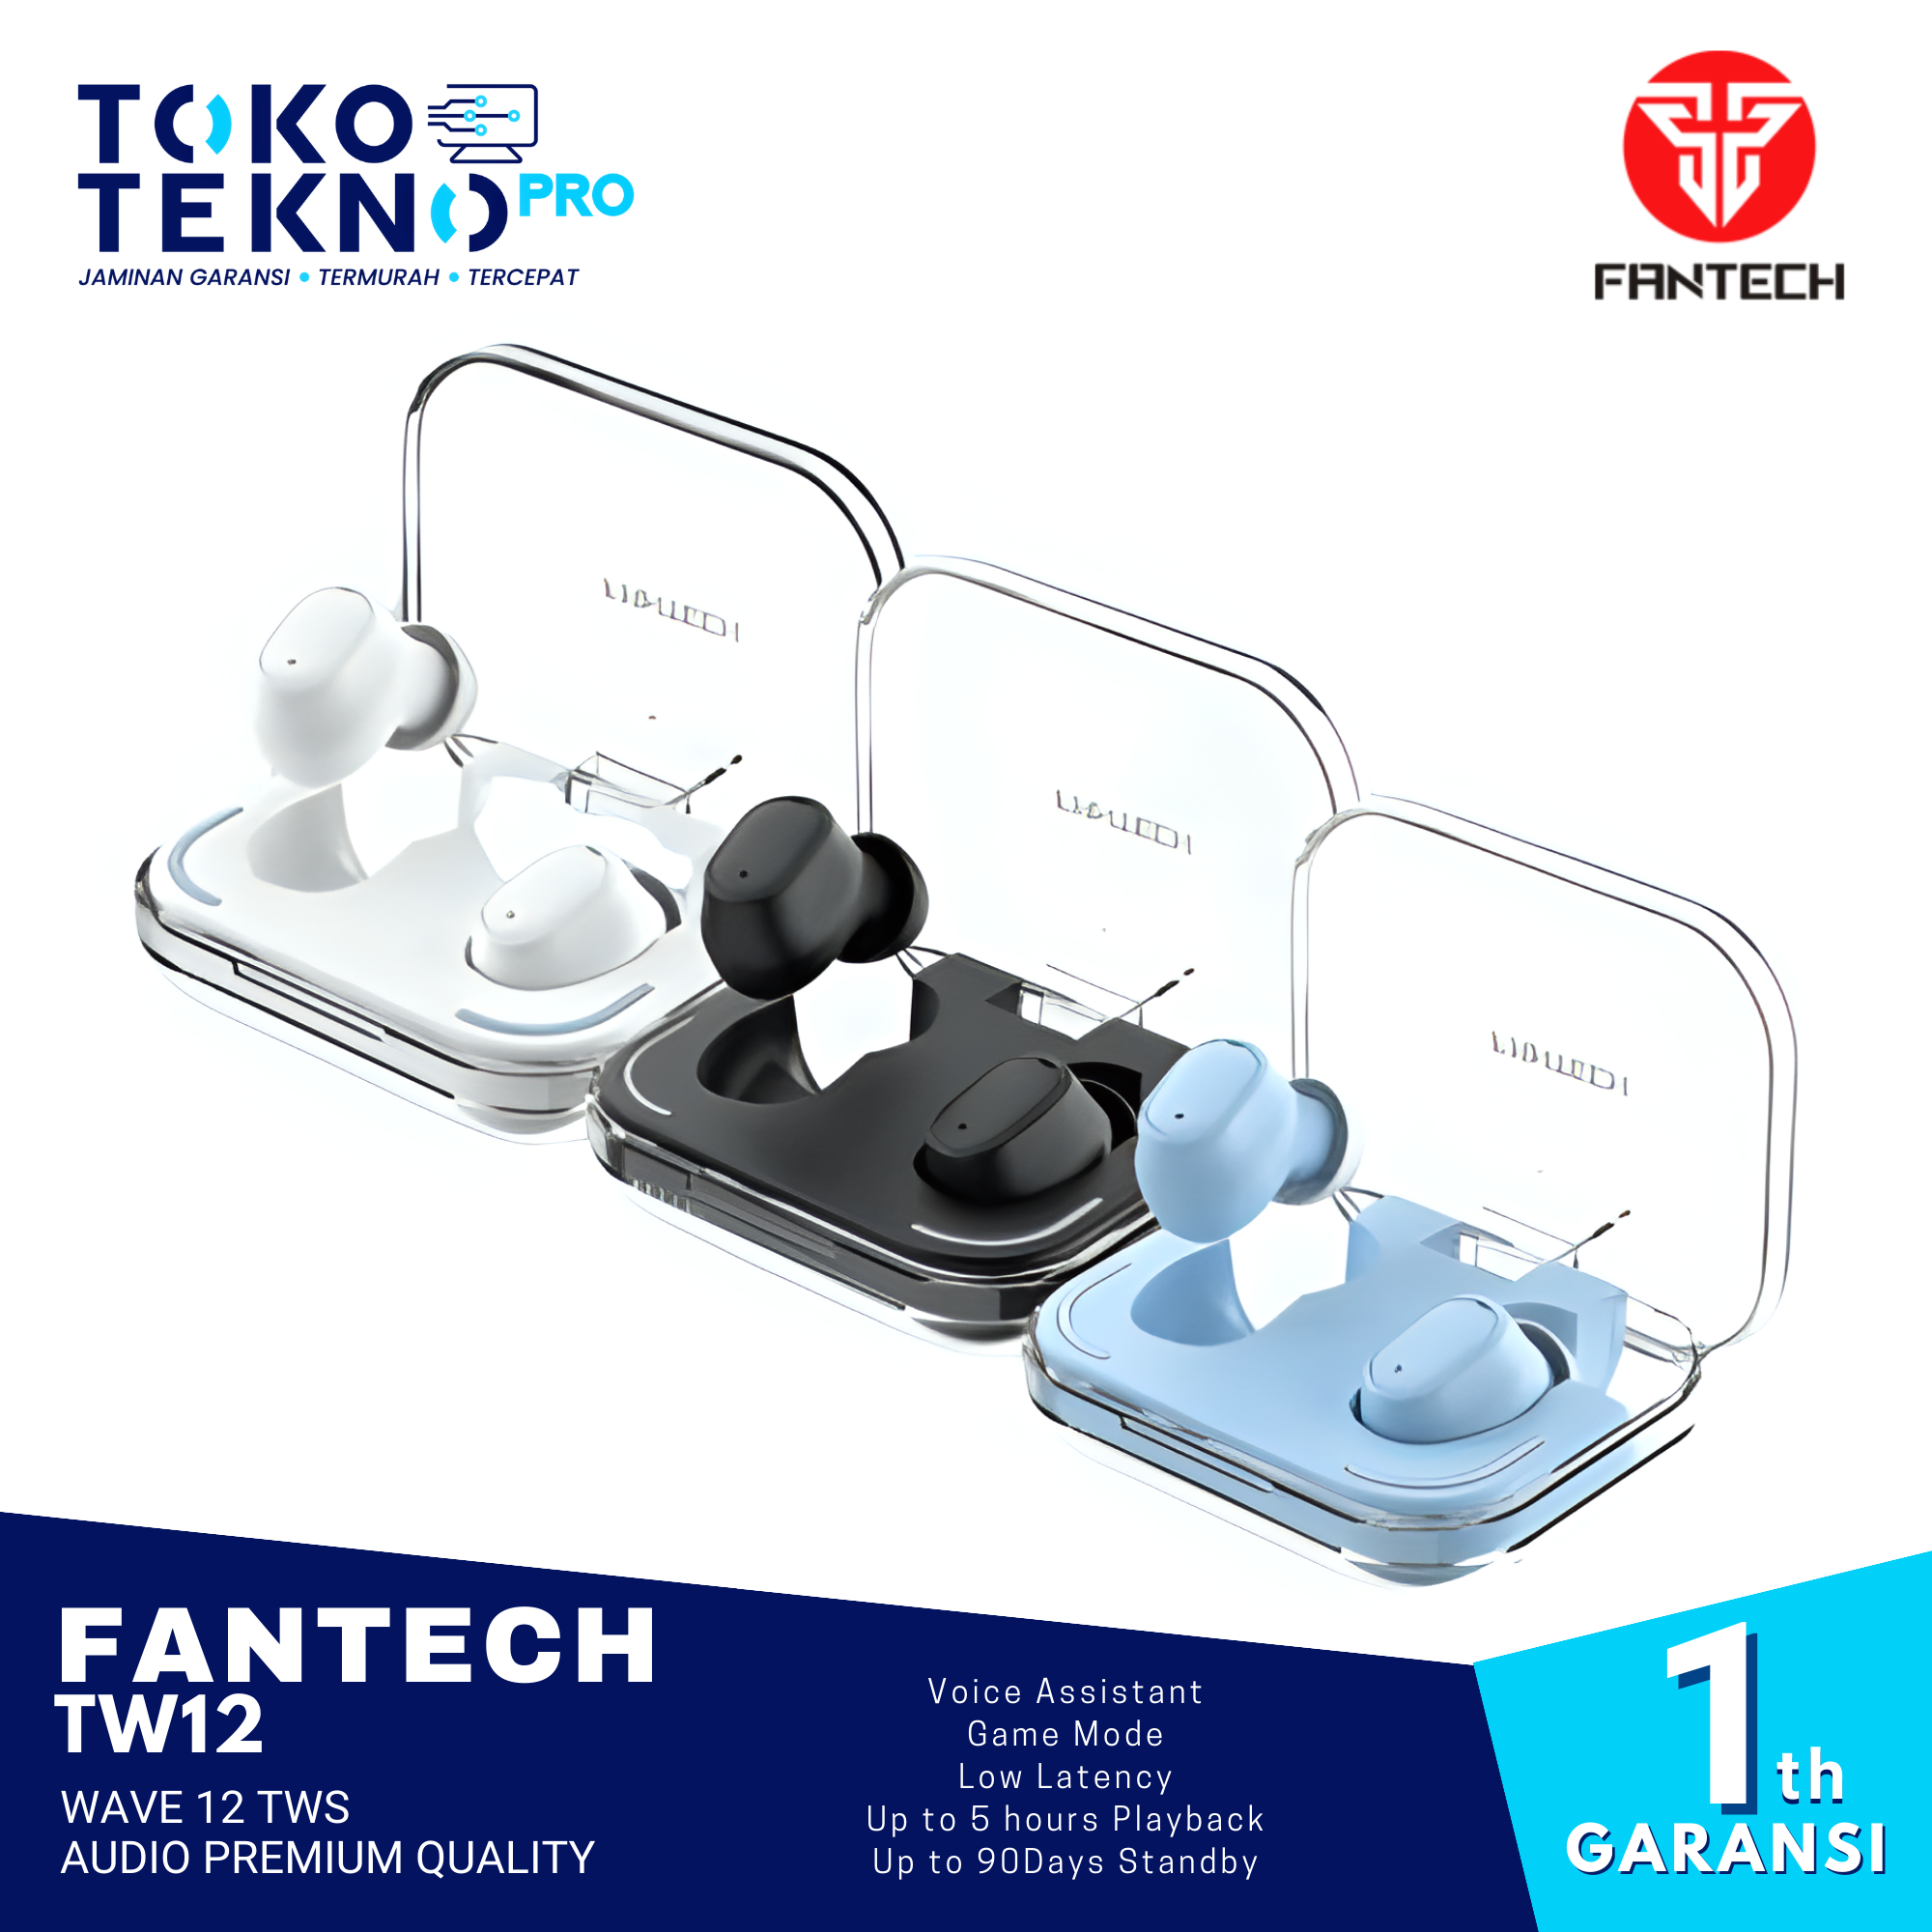 Fantech TW12 Wave 12 TWS Audio Premium